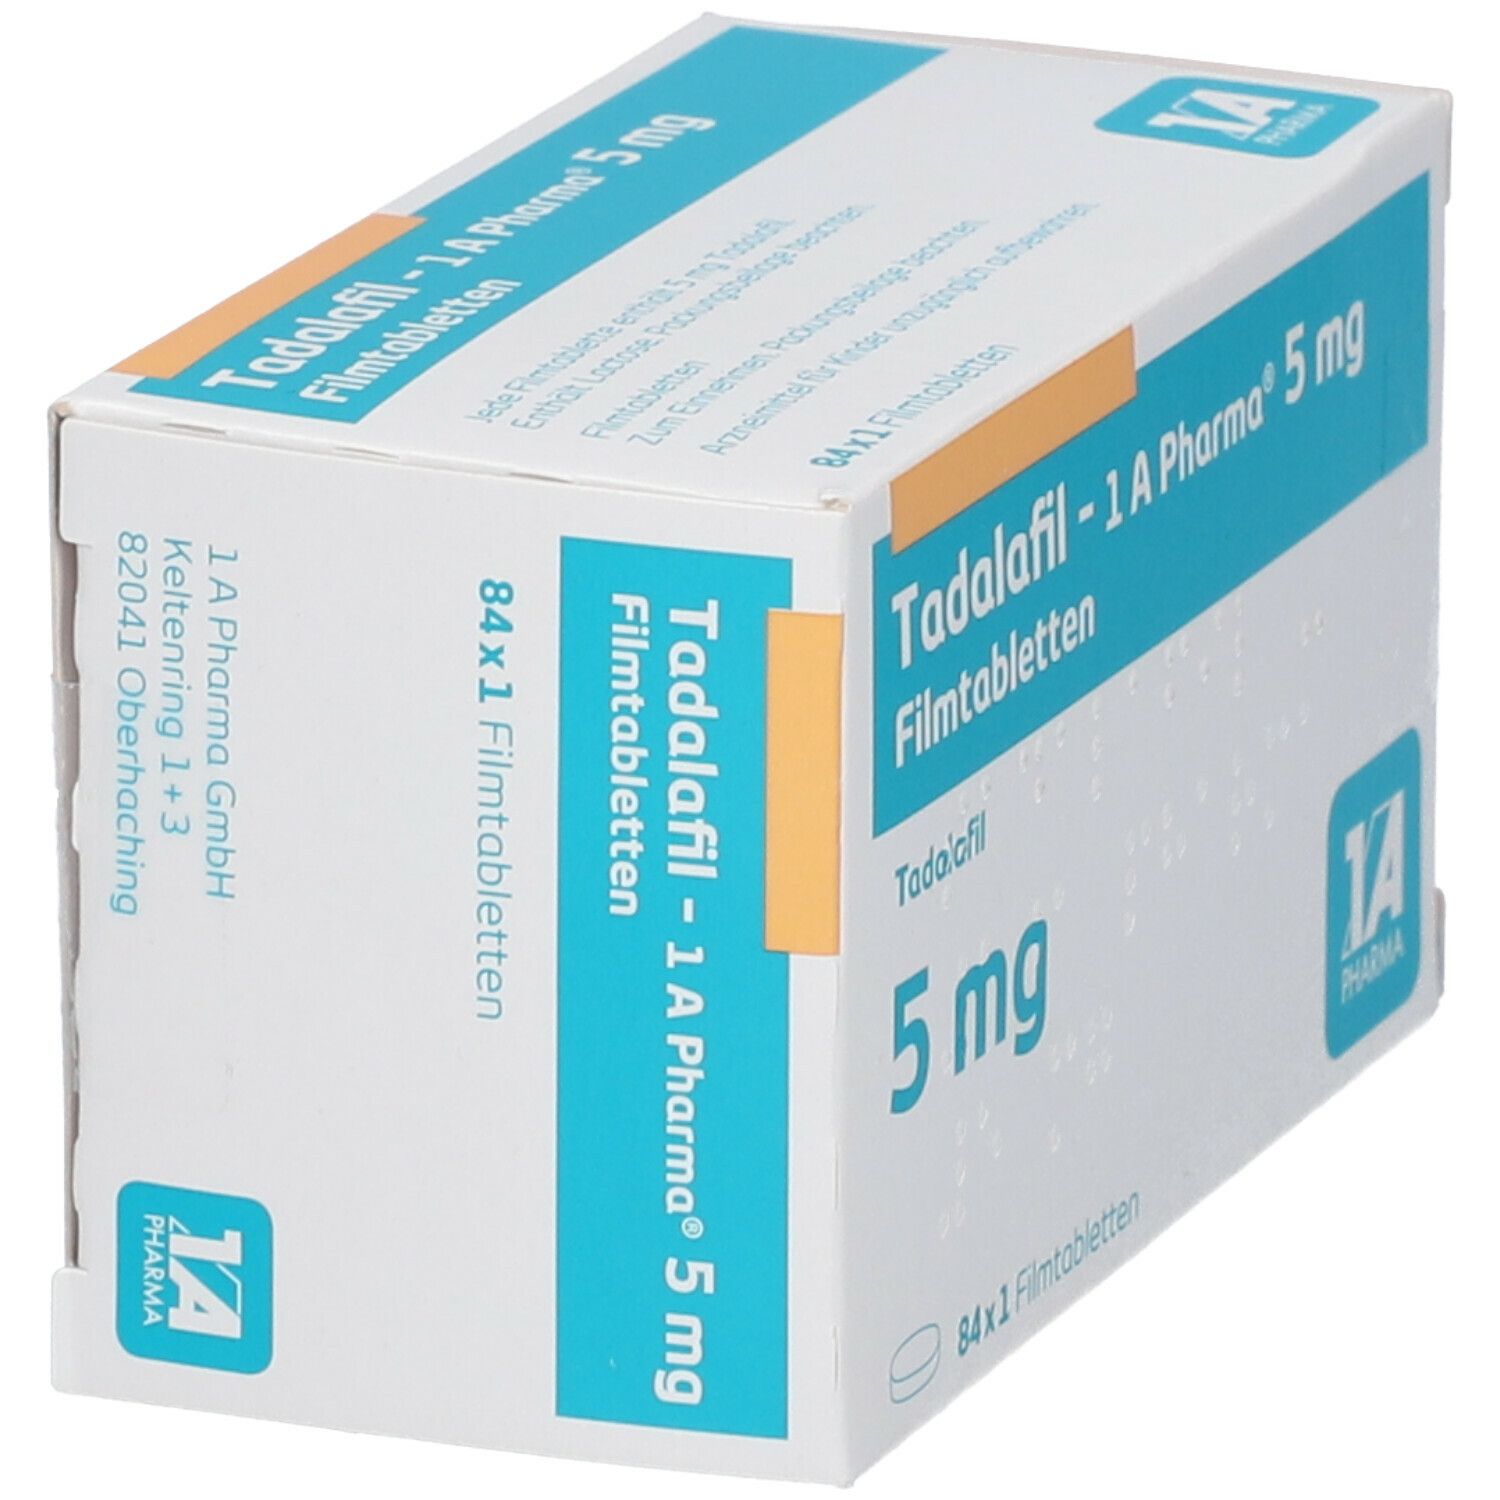 Tadalafil 1A Pharma® 5Mg